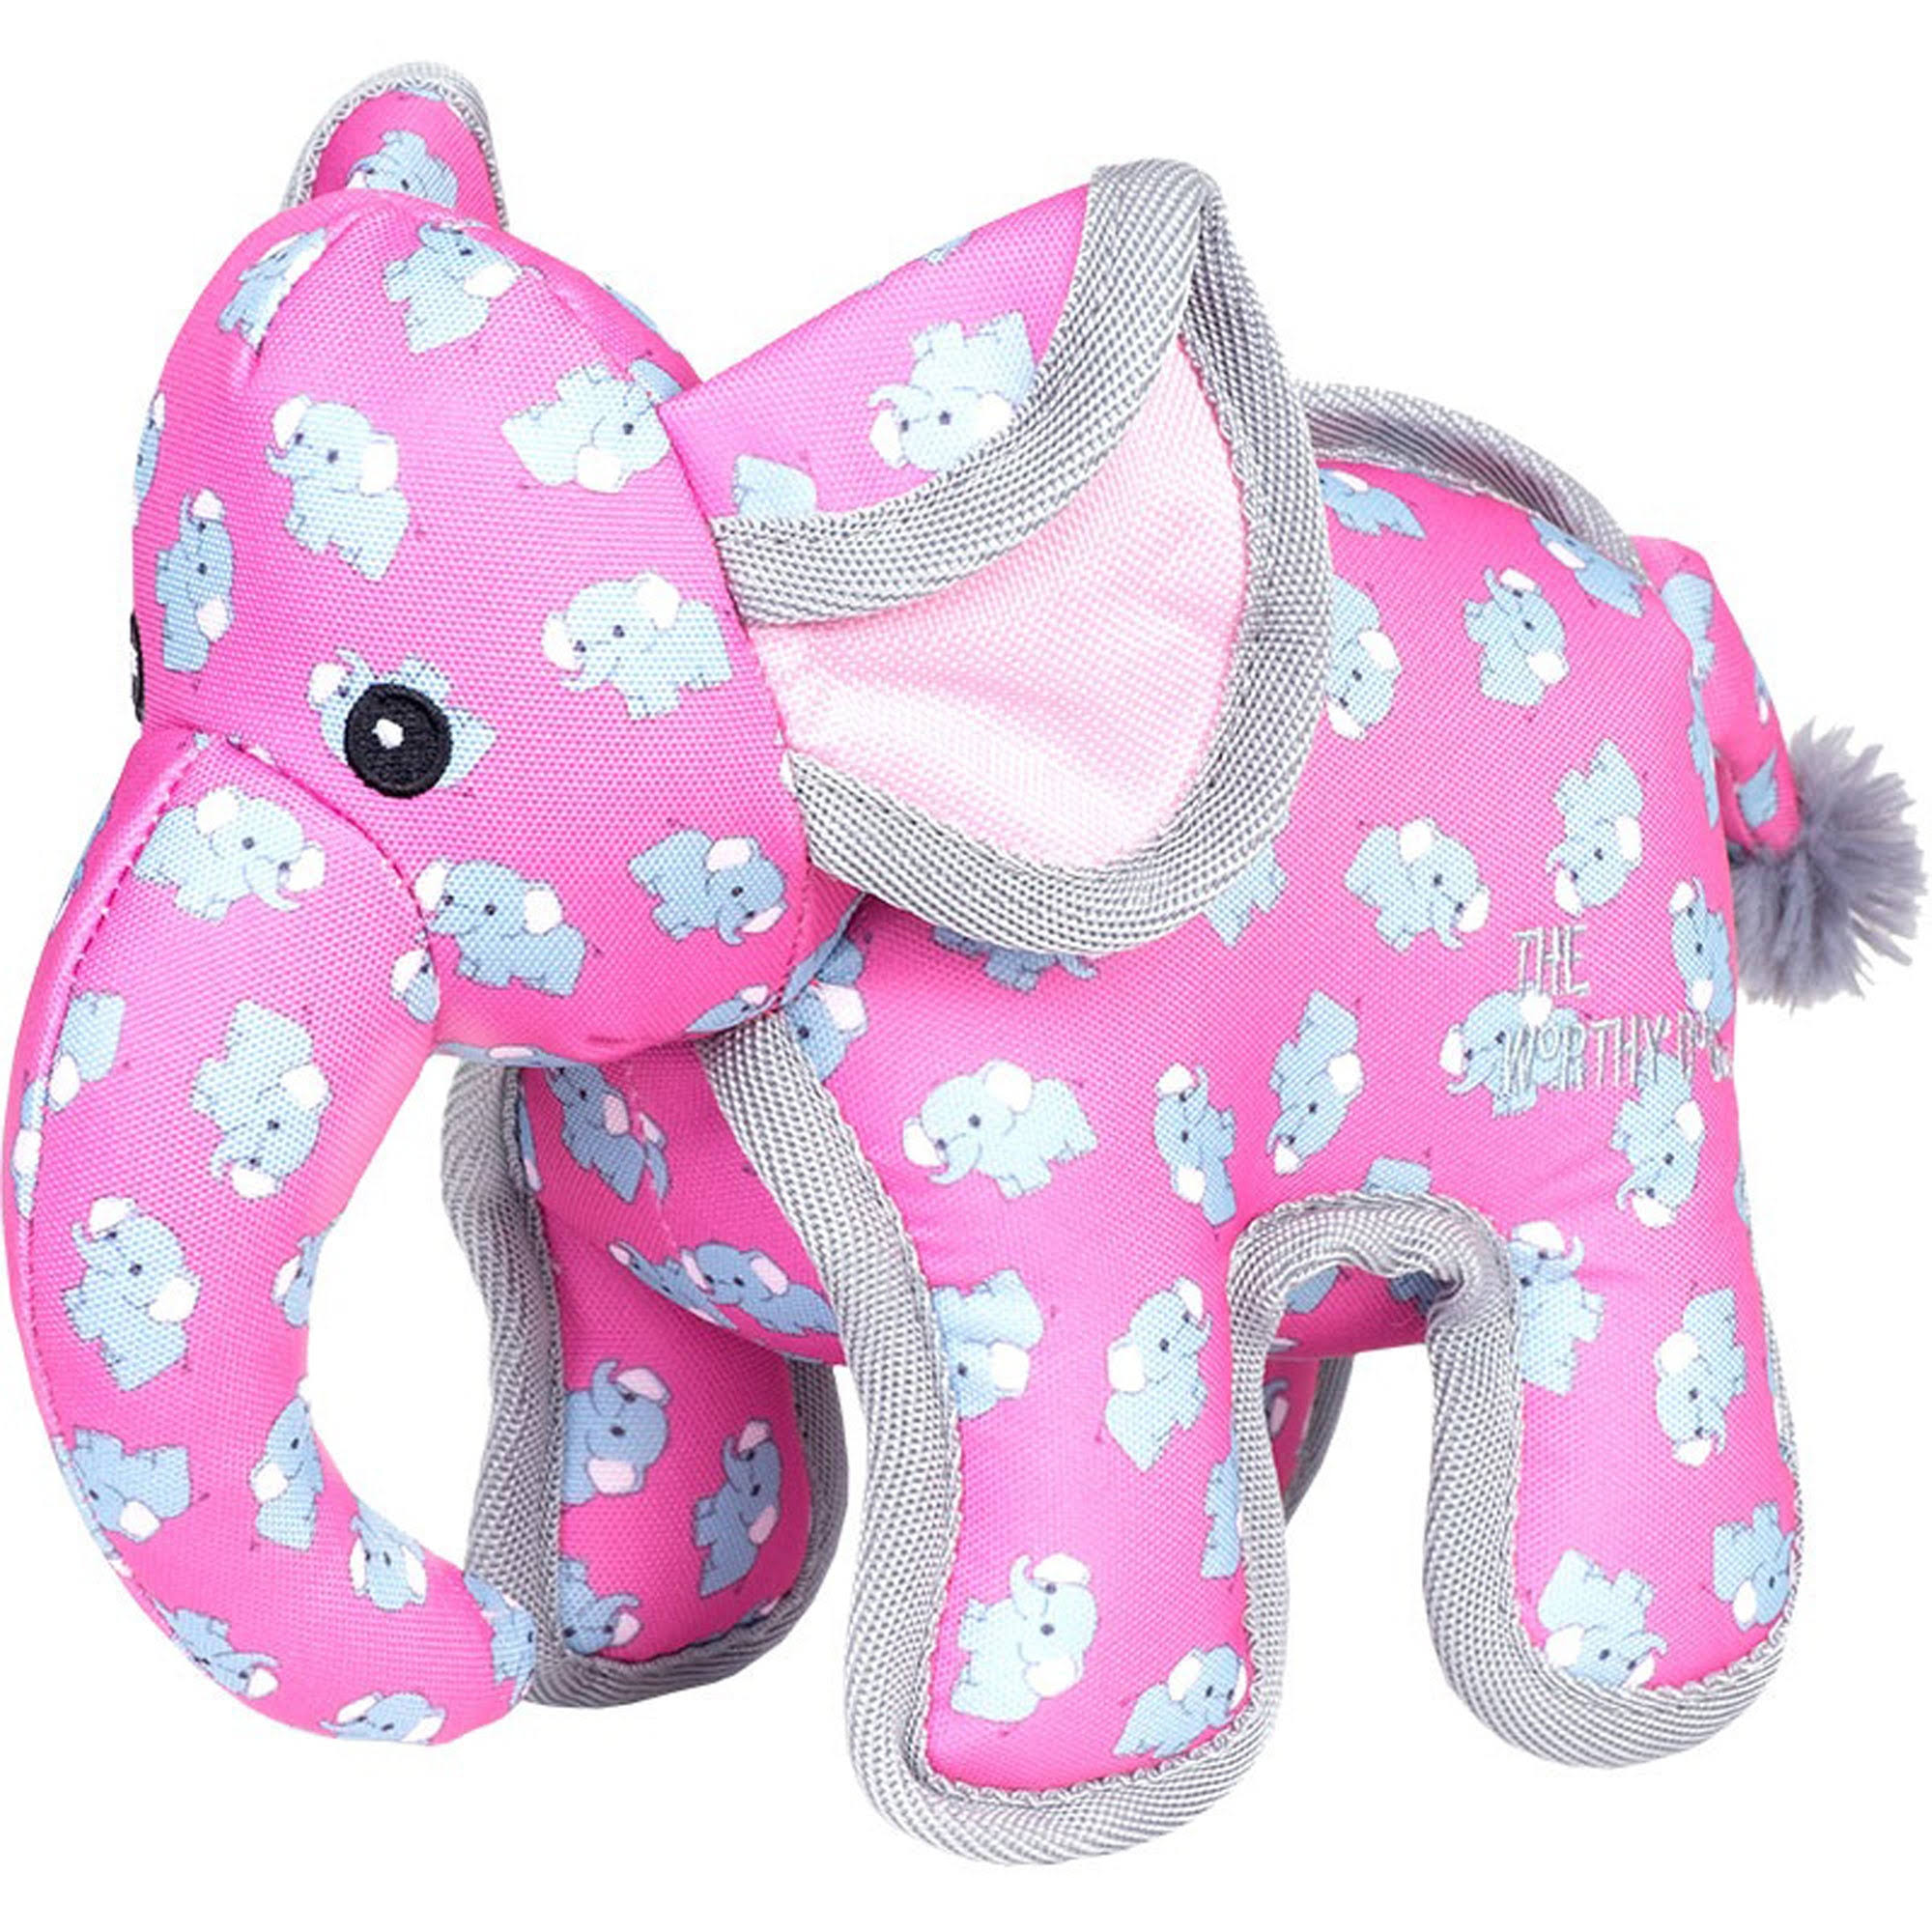 The Worthy Dog Pinky Elephant Dog Toy, Small